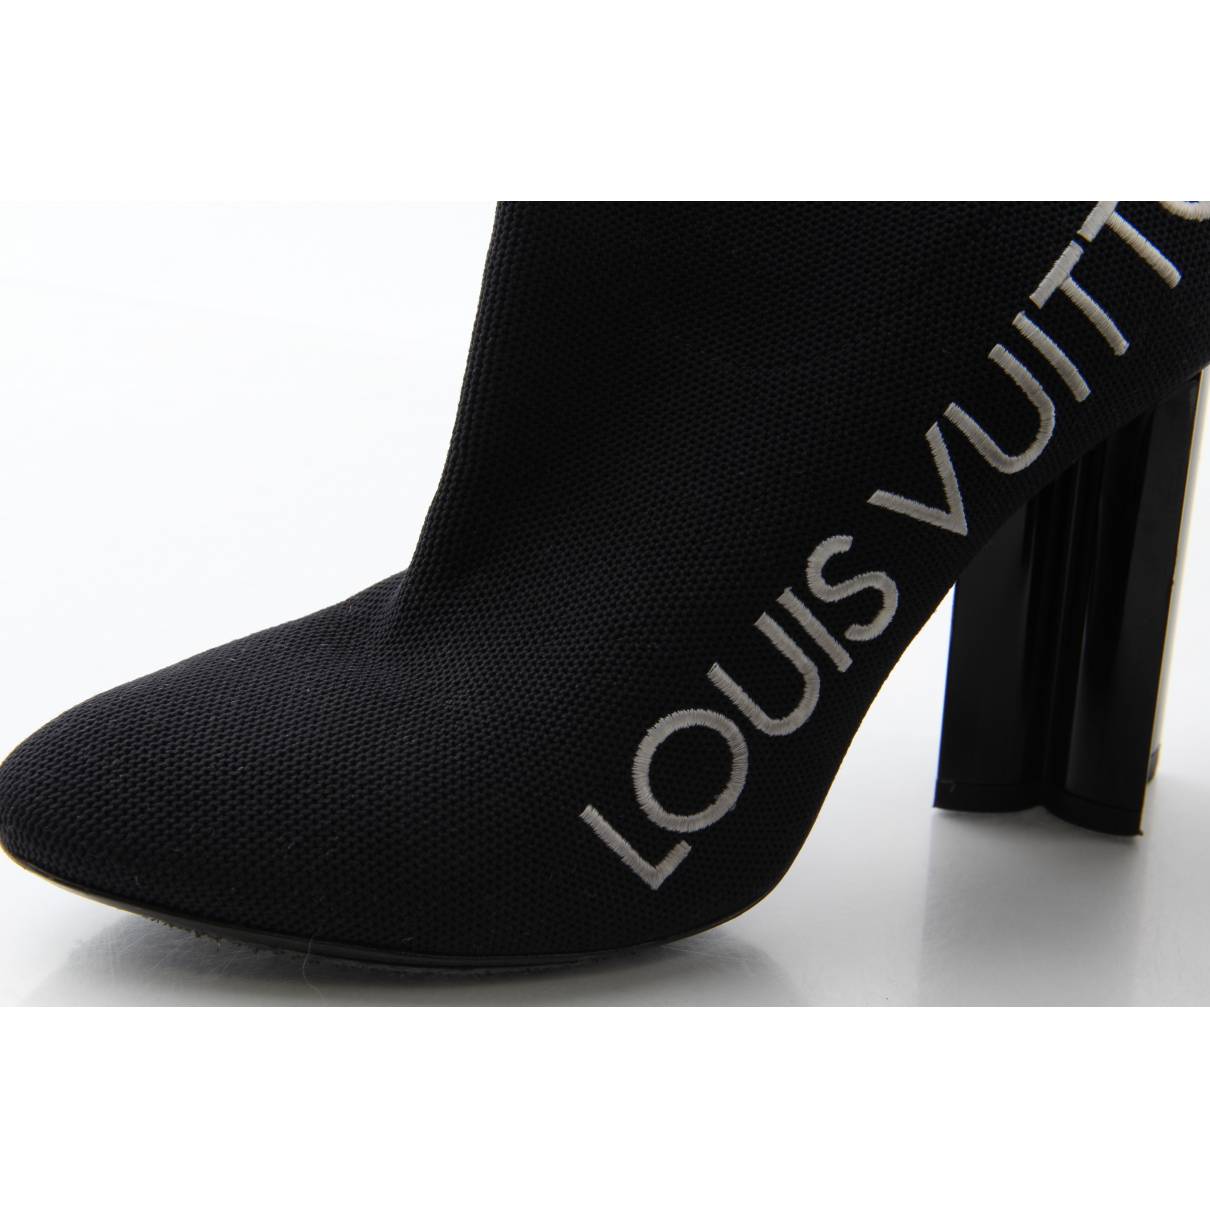 Louis Vuitton Silhouette Ankle Boot, Black, IT34.5